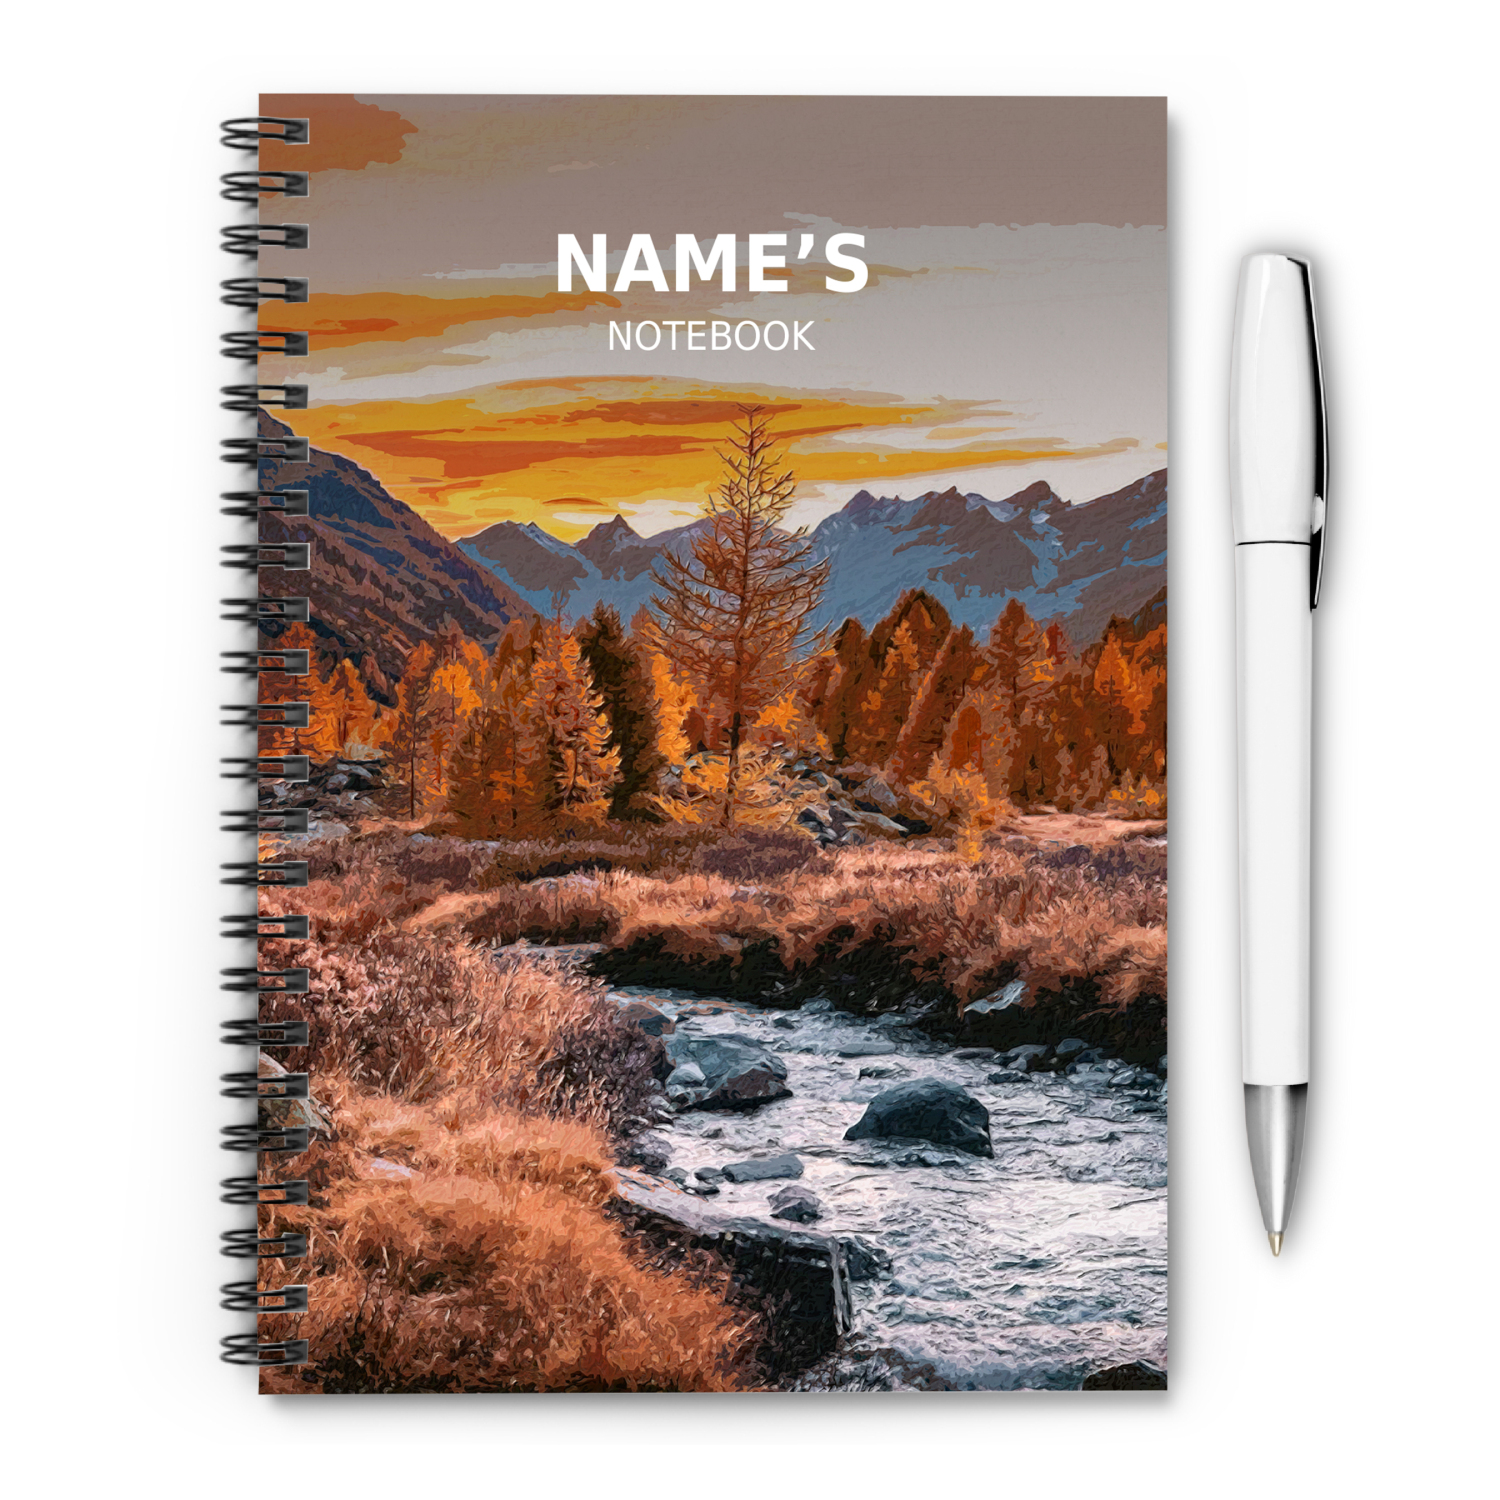 Valais - Switzerland - A5 Notebook - Single Note Book